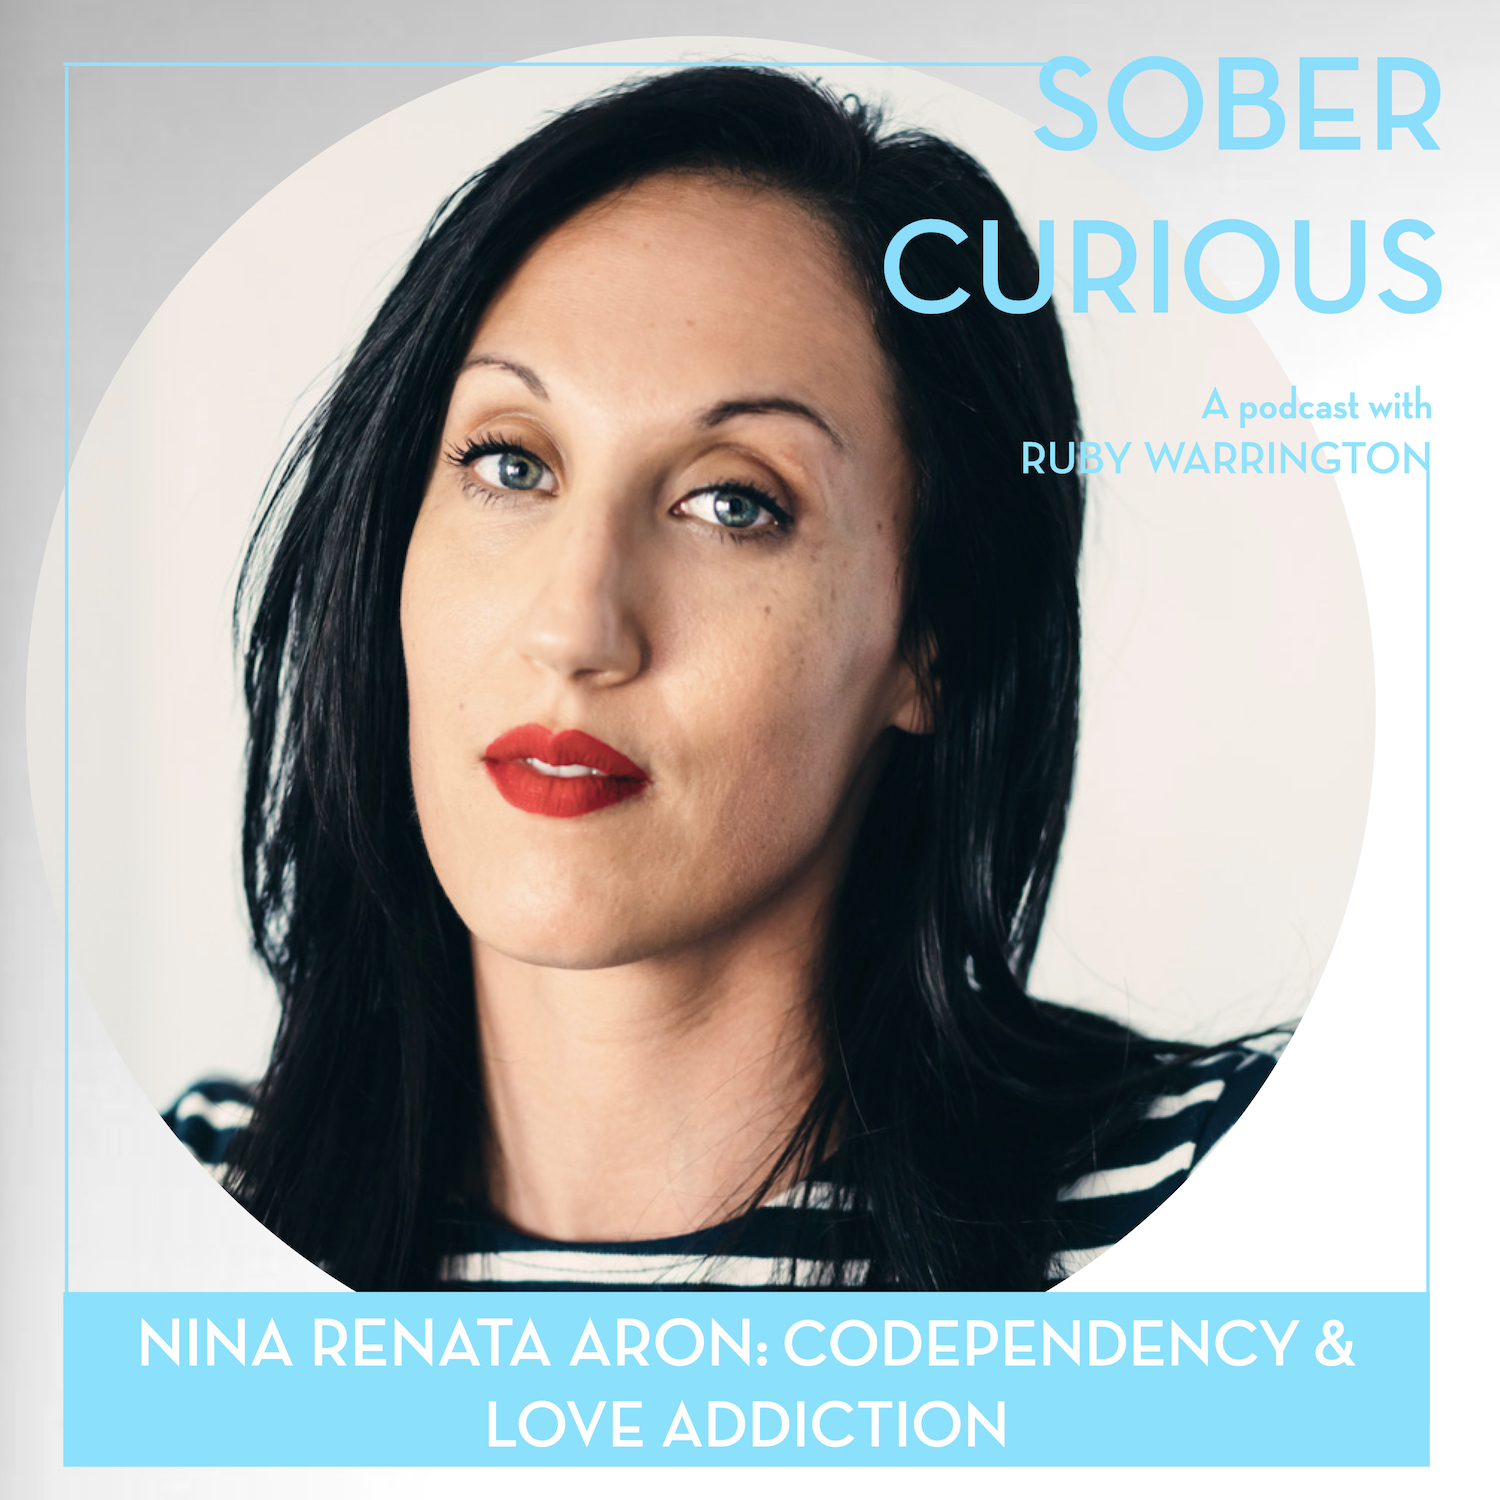 Nina Renata Aron sober curious podcast ruby warrington codependency